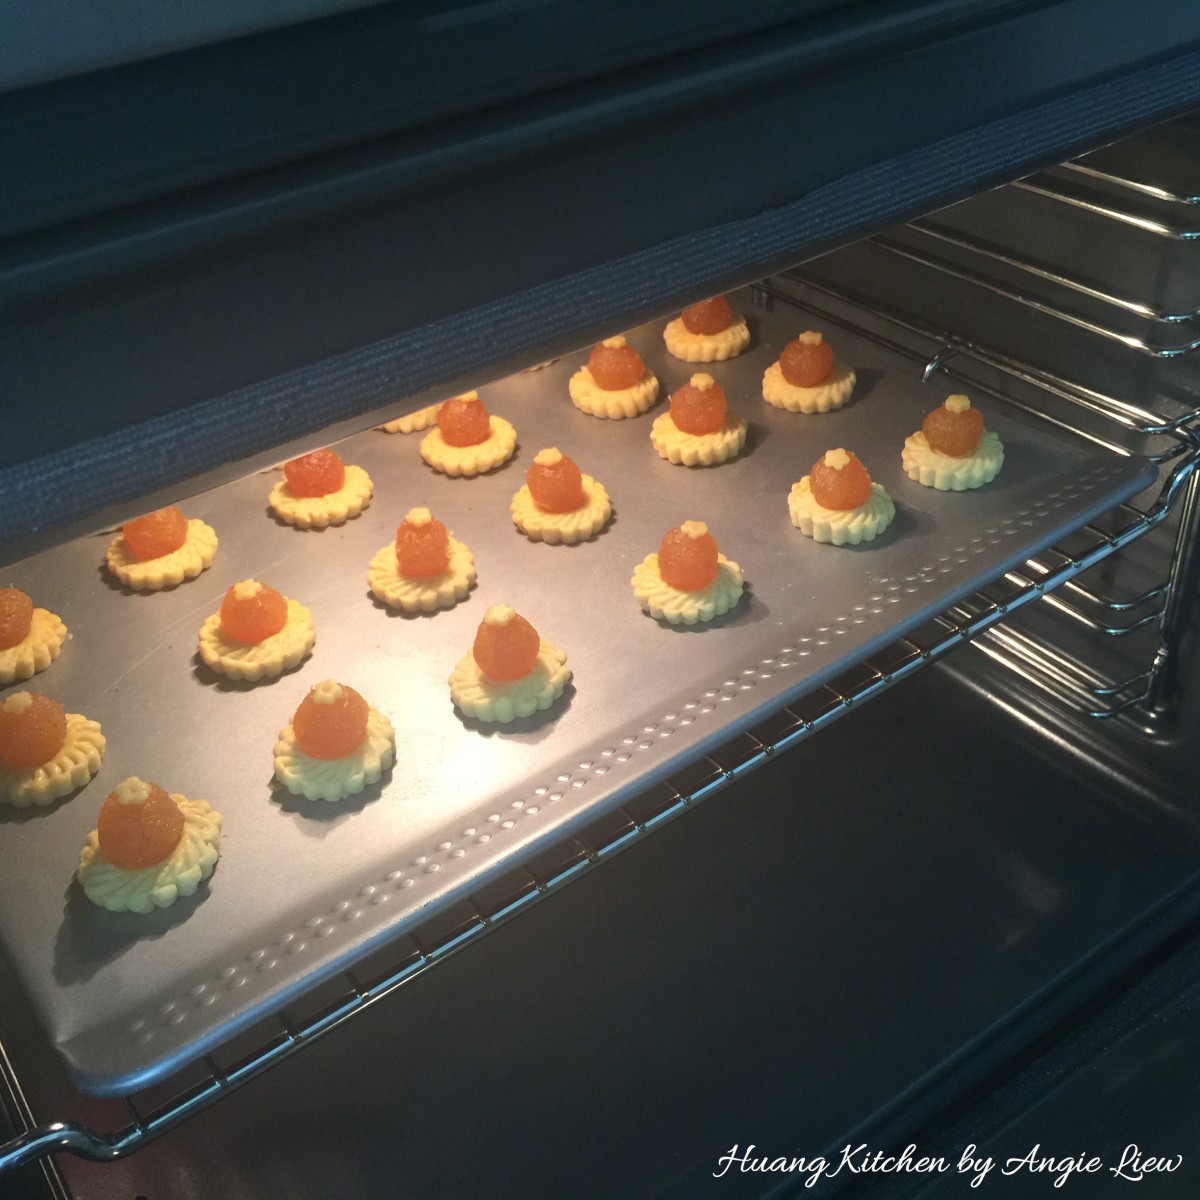 Dainty Pineapple Tarts - bake tarts again